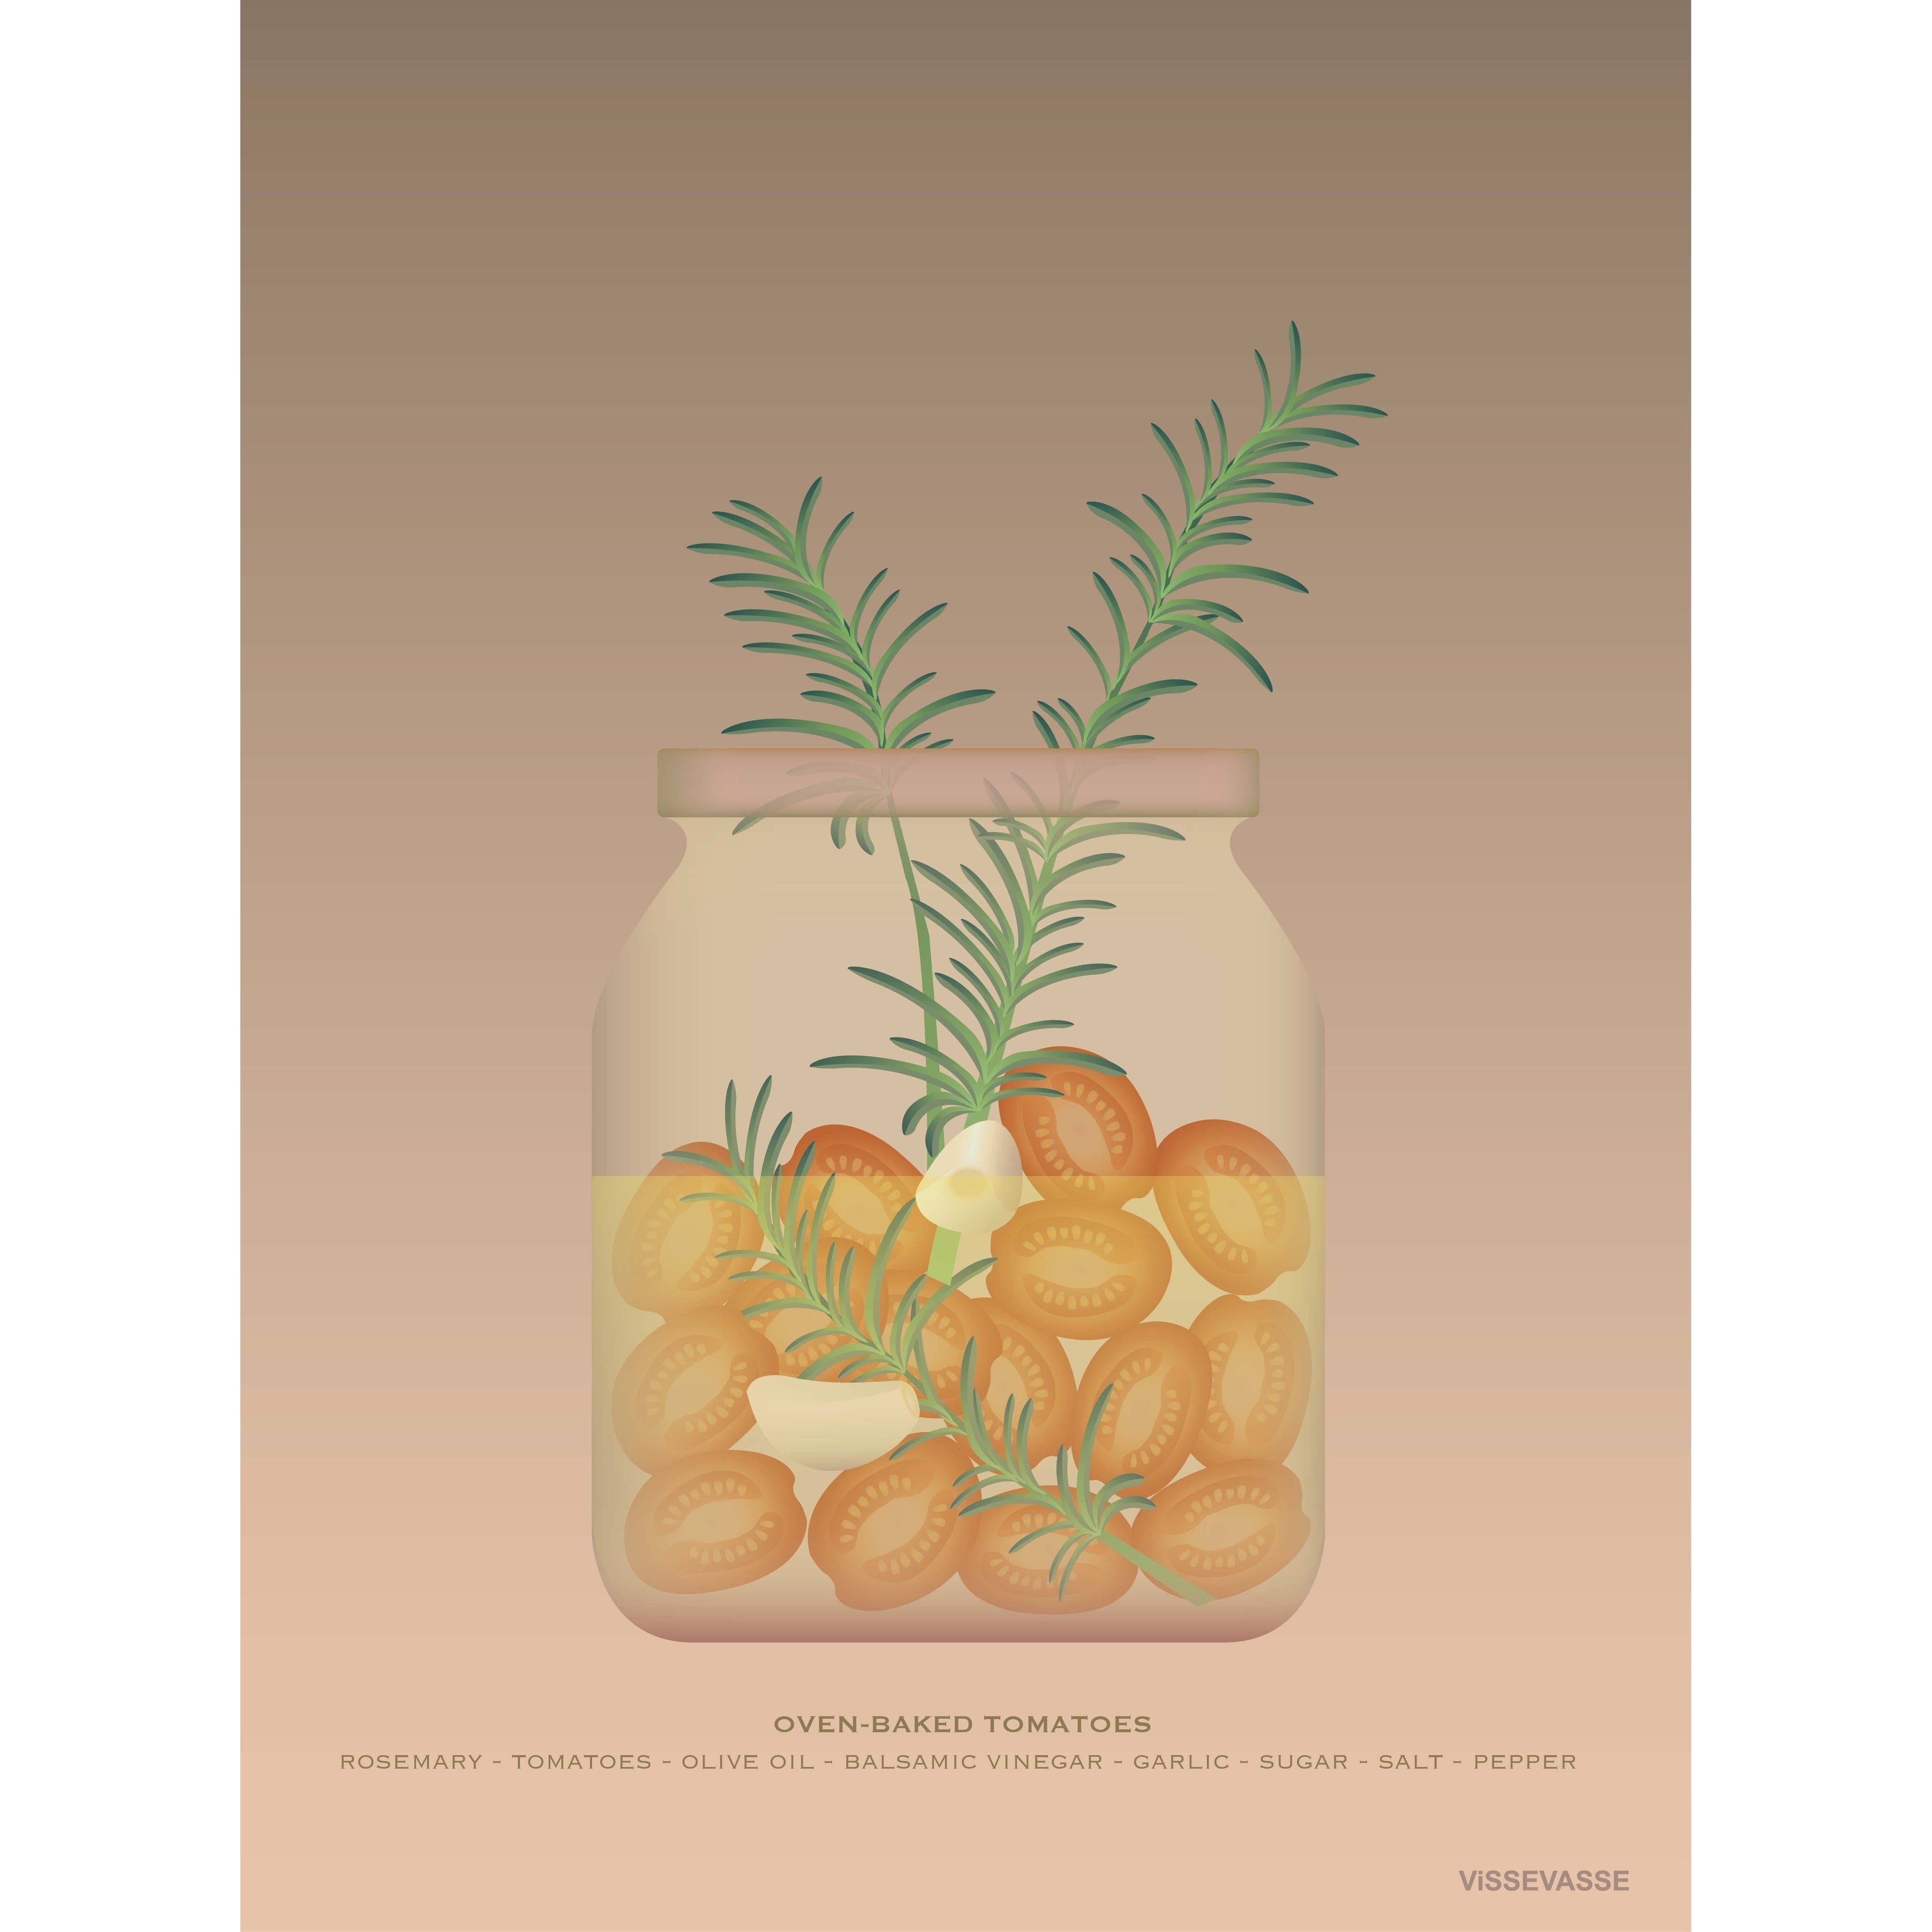 Vissevasse Överbakade tomater affisch, 15x21 cm